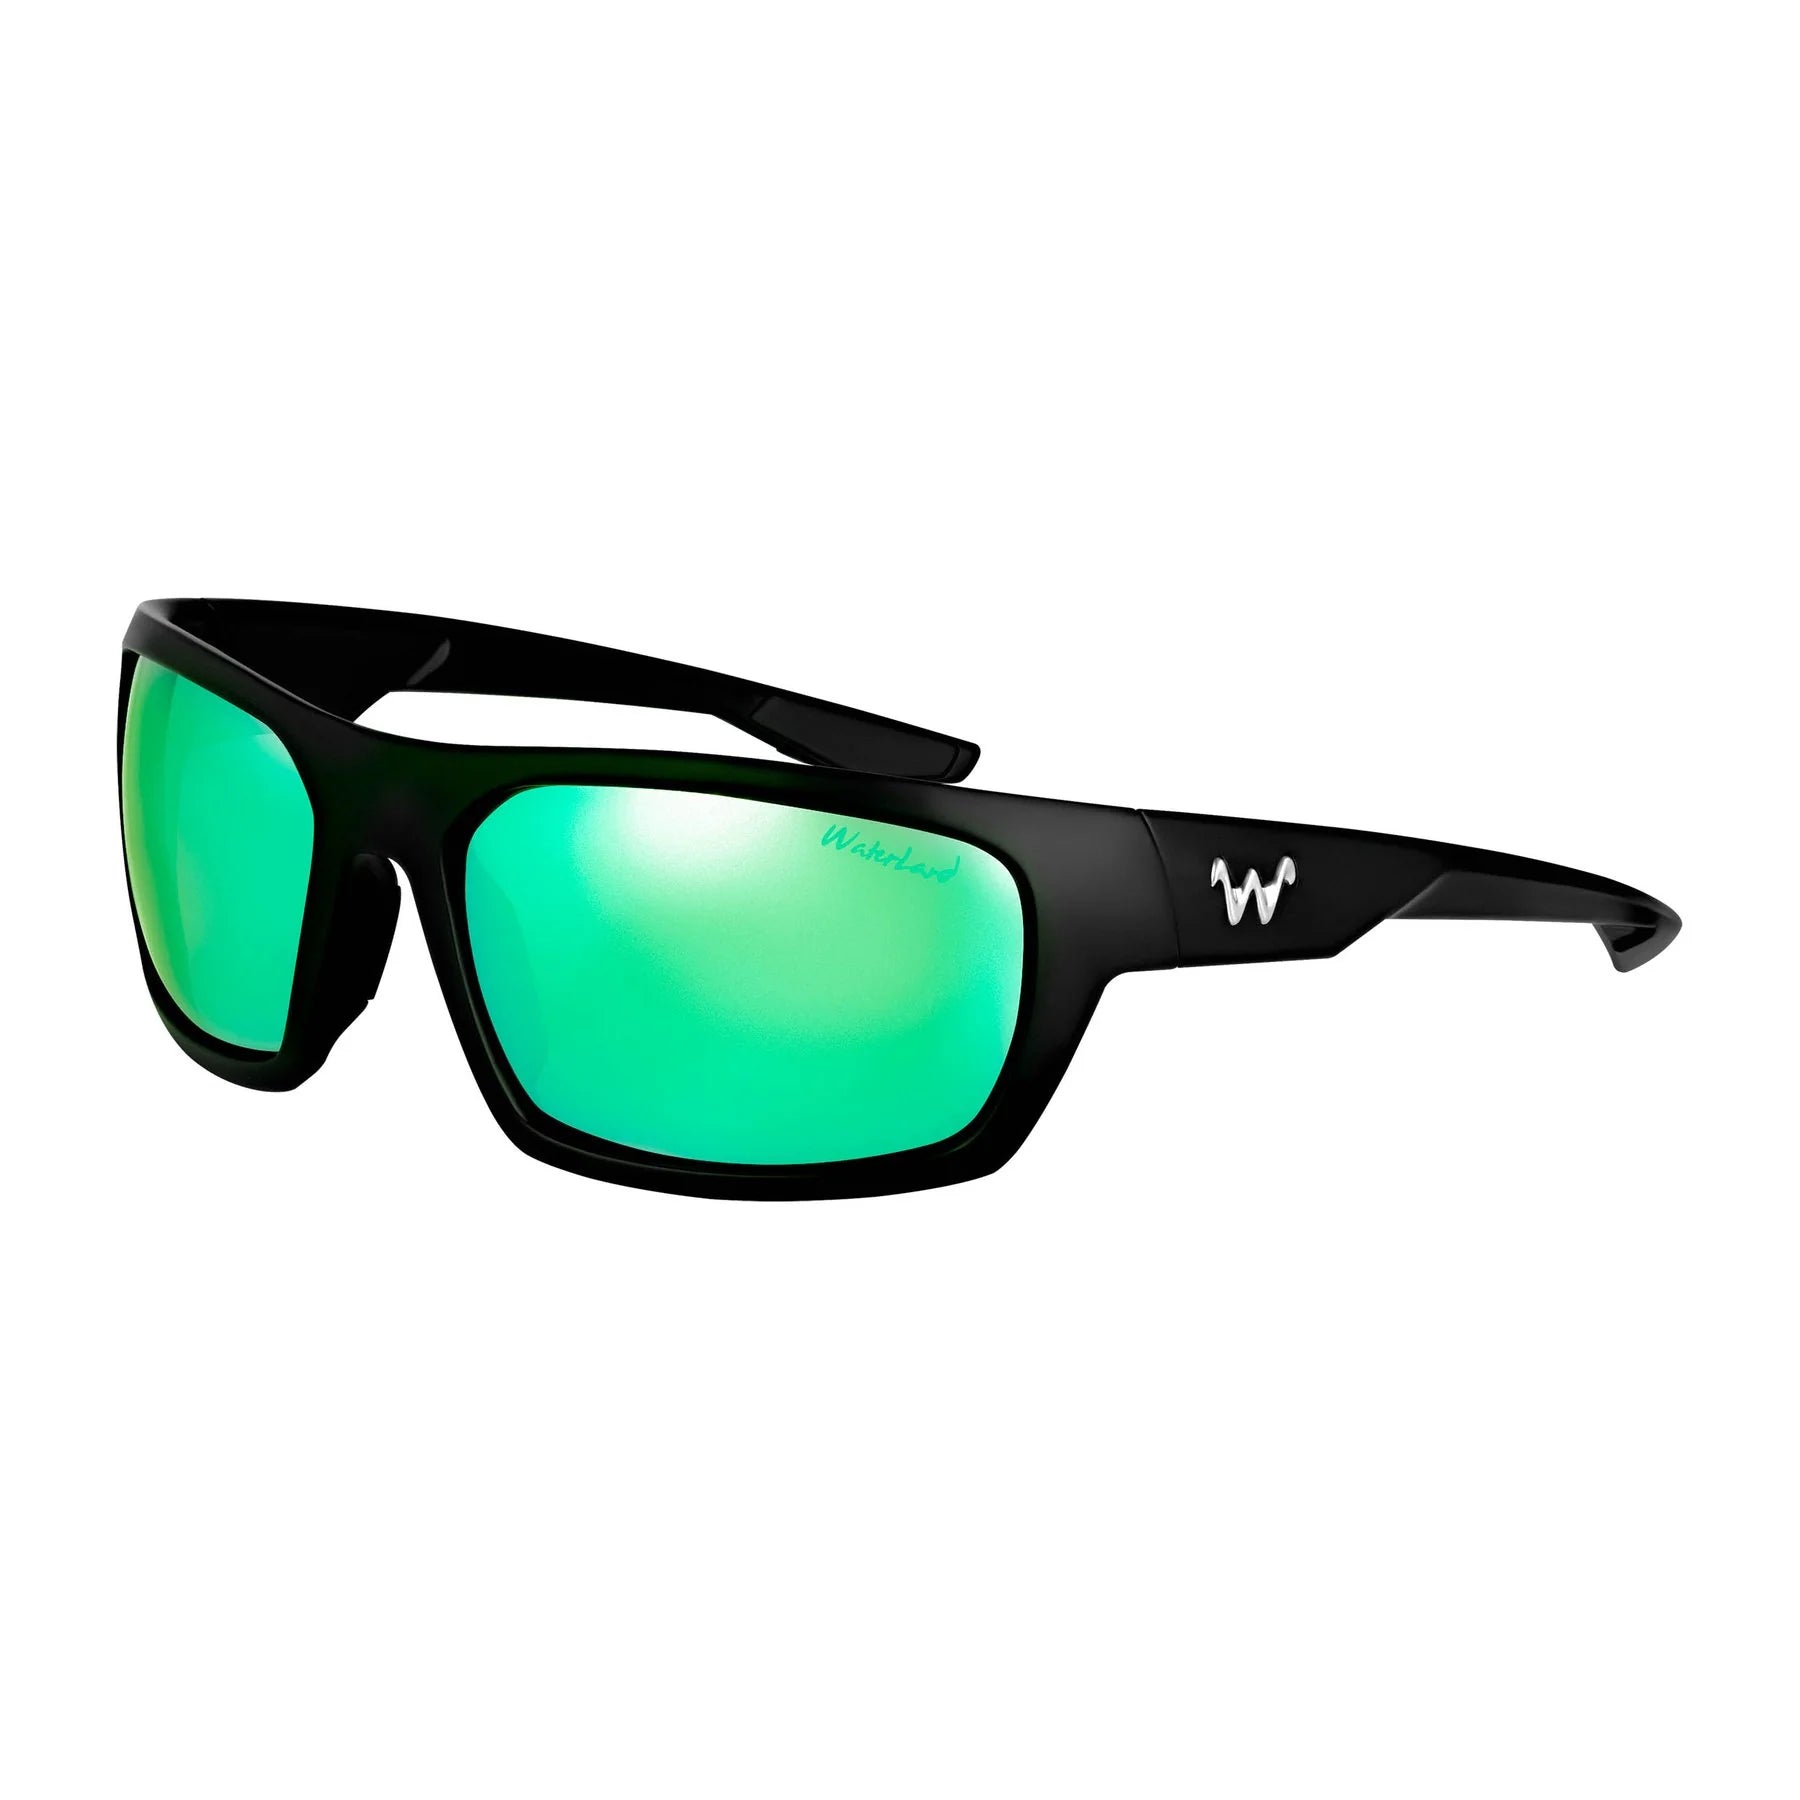 Waterland Milliken Sunglasses PolyCarbonate / Black / Silver Mirror